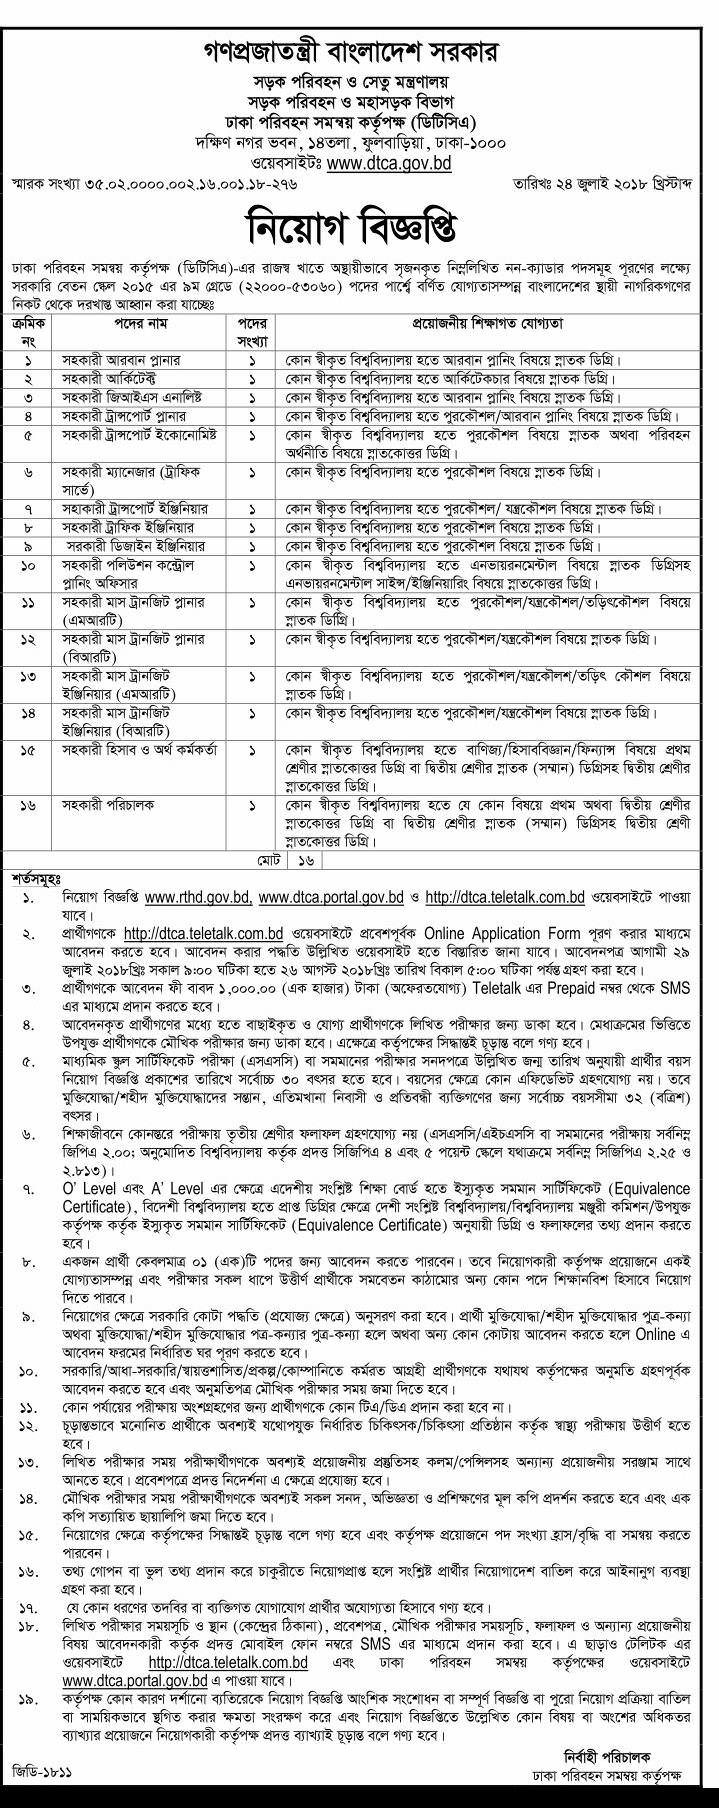 www brta gov bd job application form